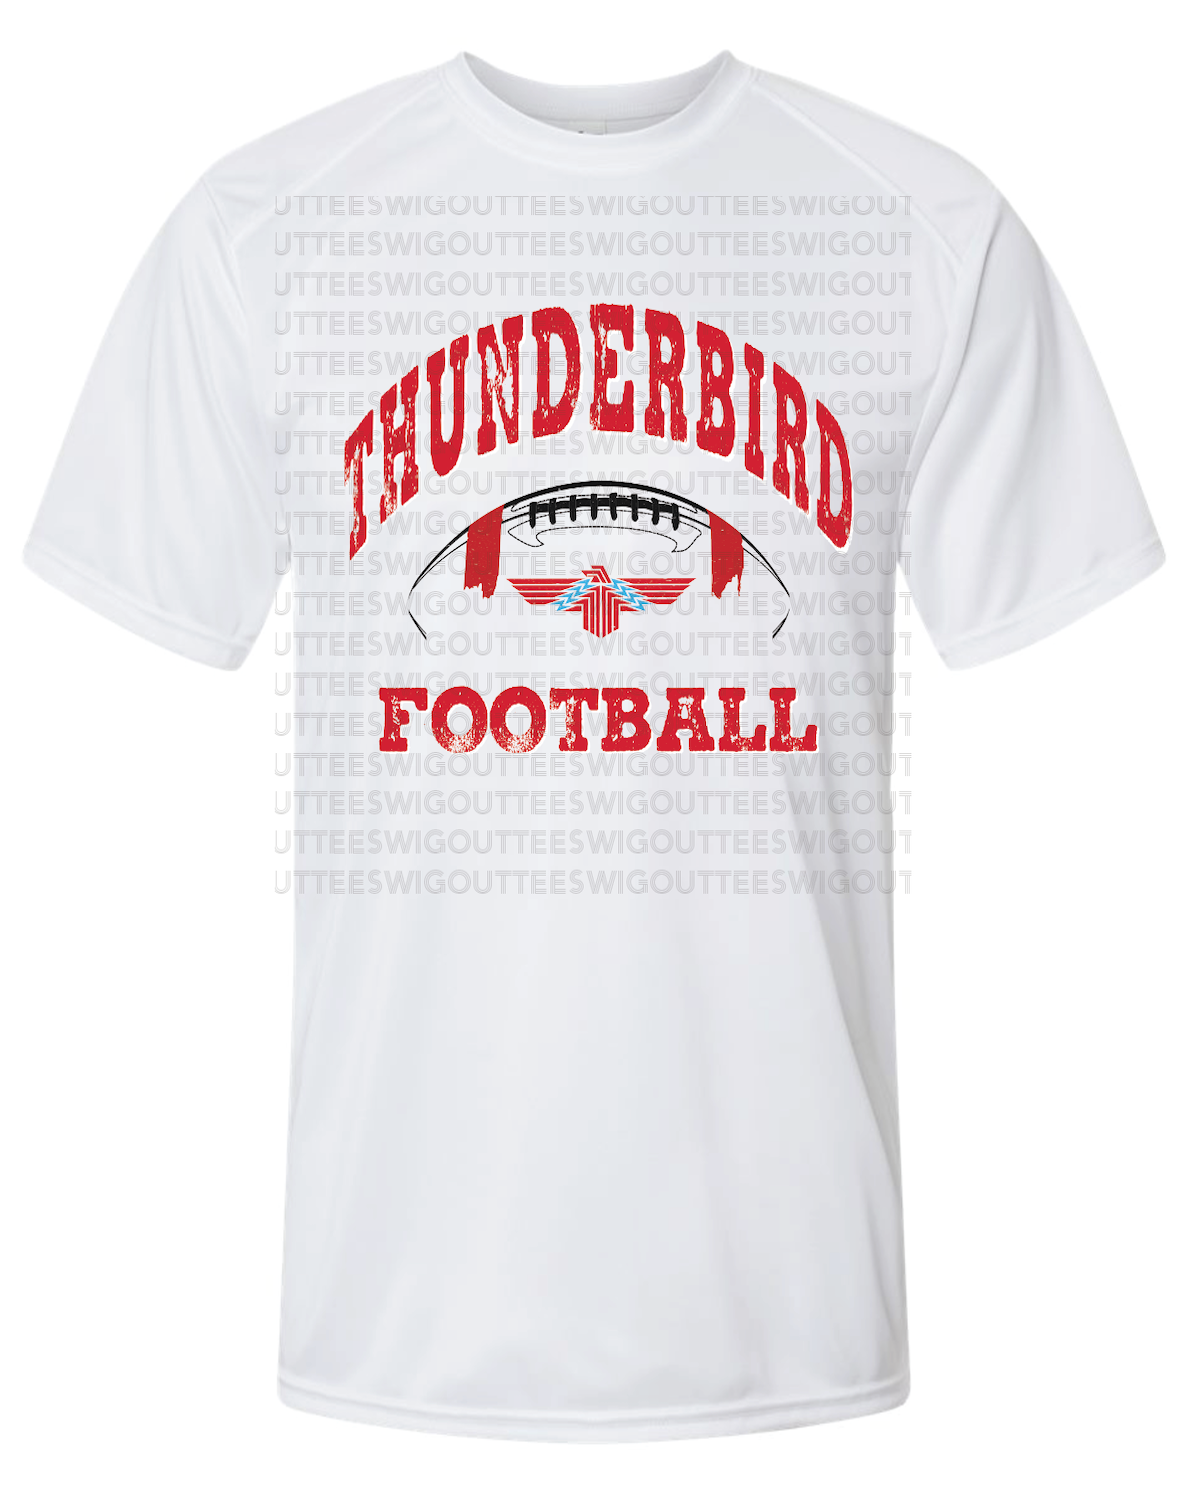 Thunderbird Football Paragon Performance T-shirt